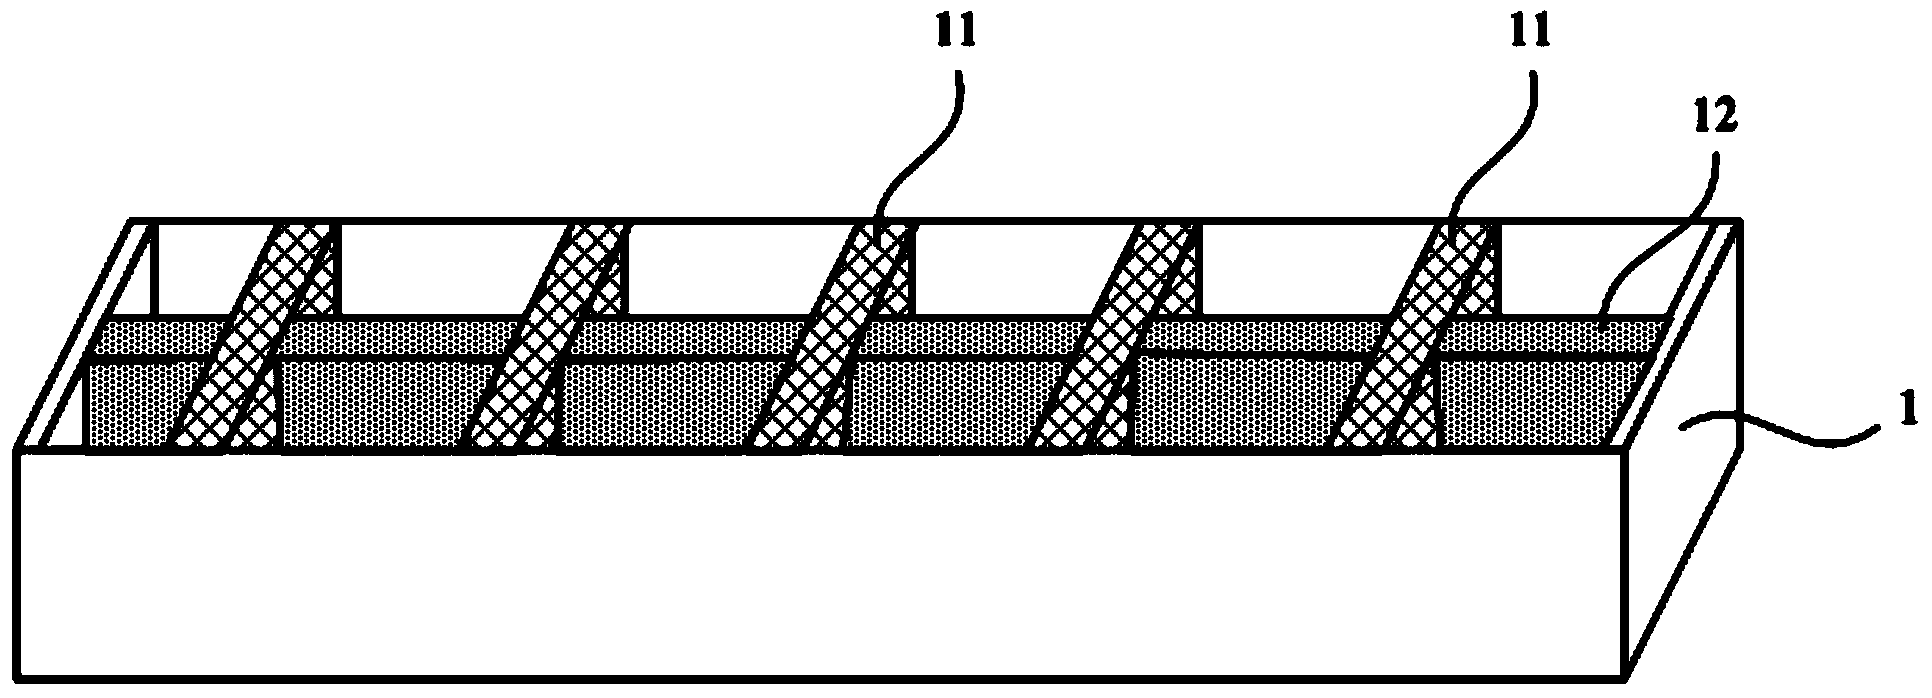 Evaporation source device for evaporator and evaporator